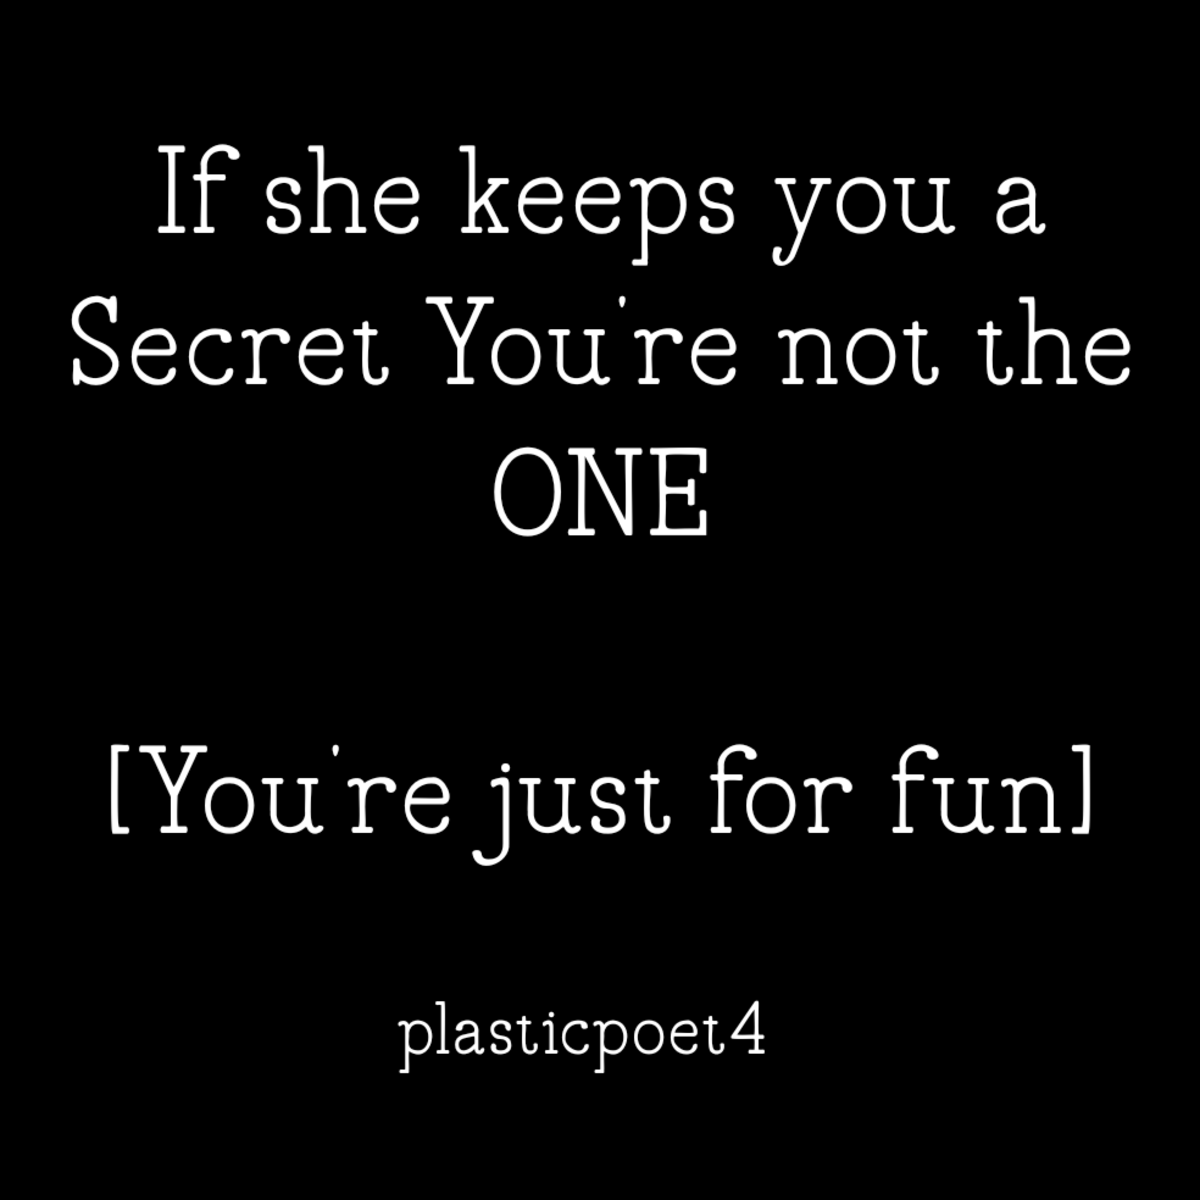 Just a secret